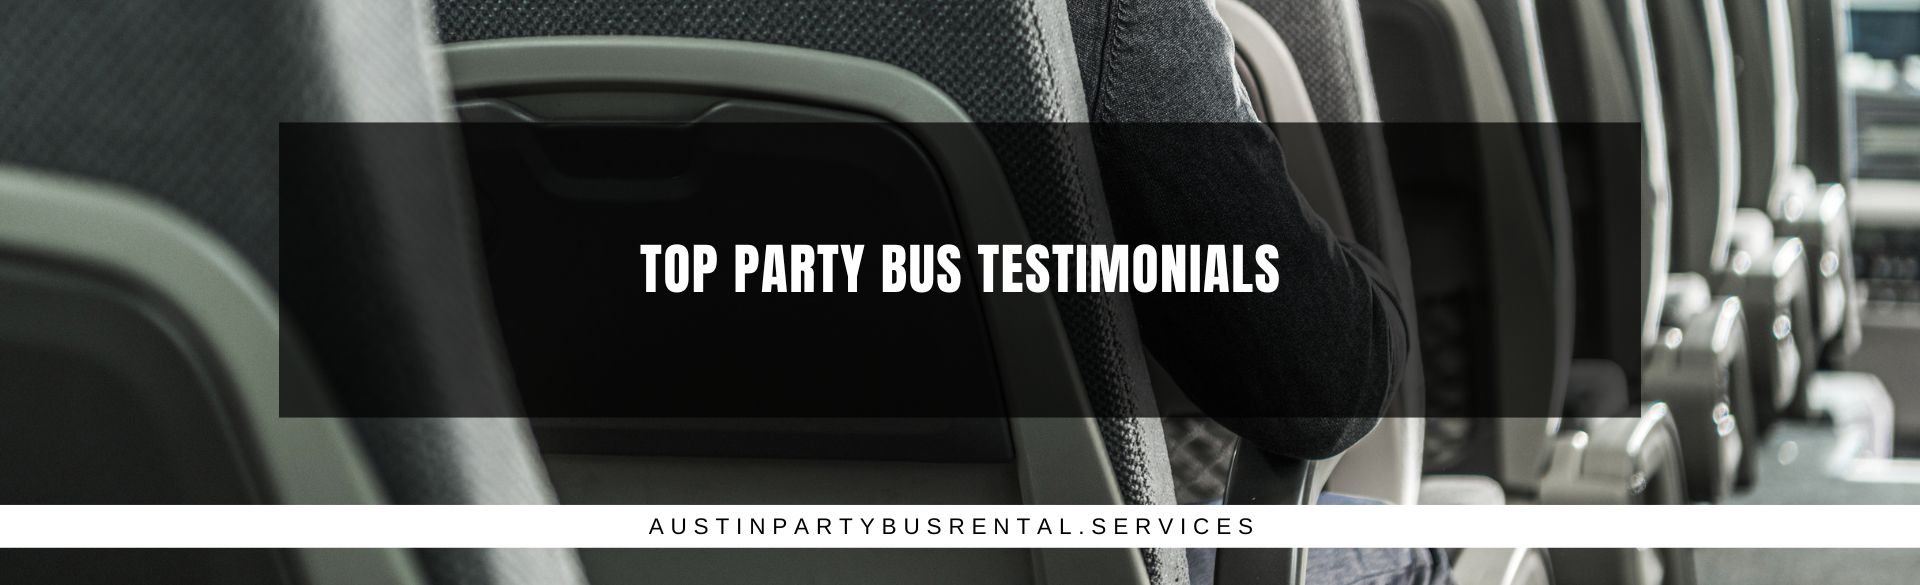 Top Party Bus Testimonials